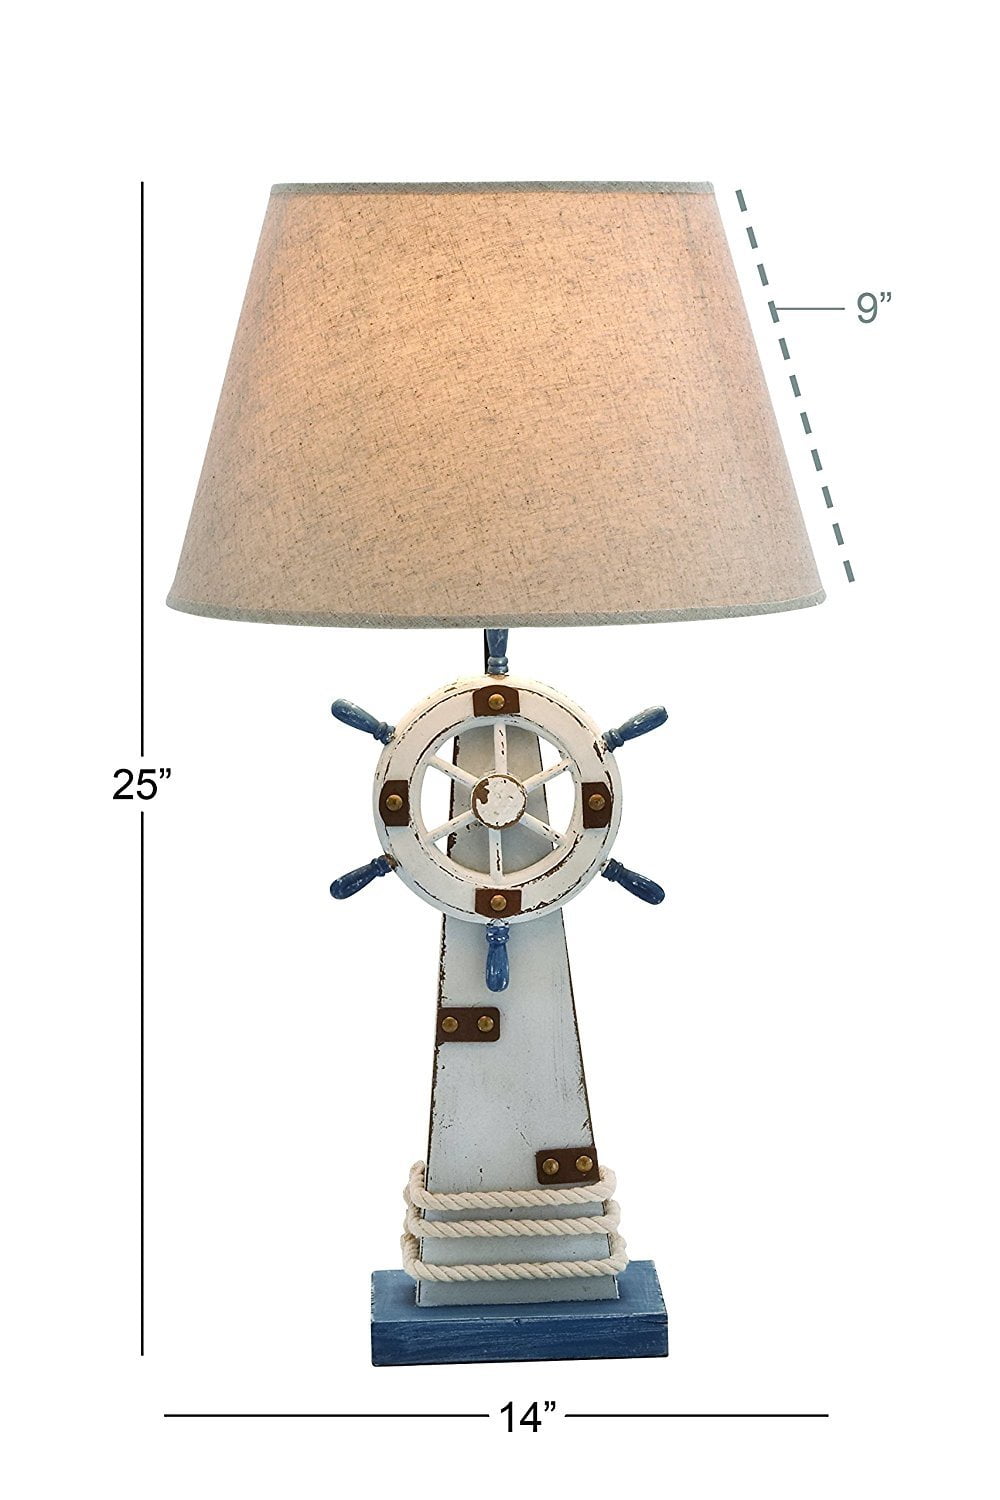 Blue/White/Gold Uma Enterprises Deco 79 39995 Table Lamp 